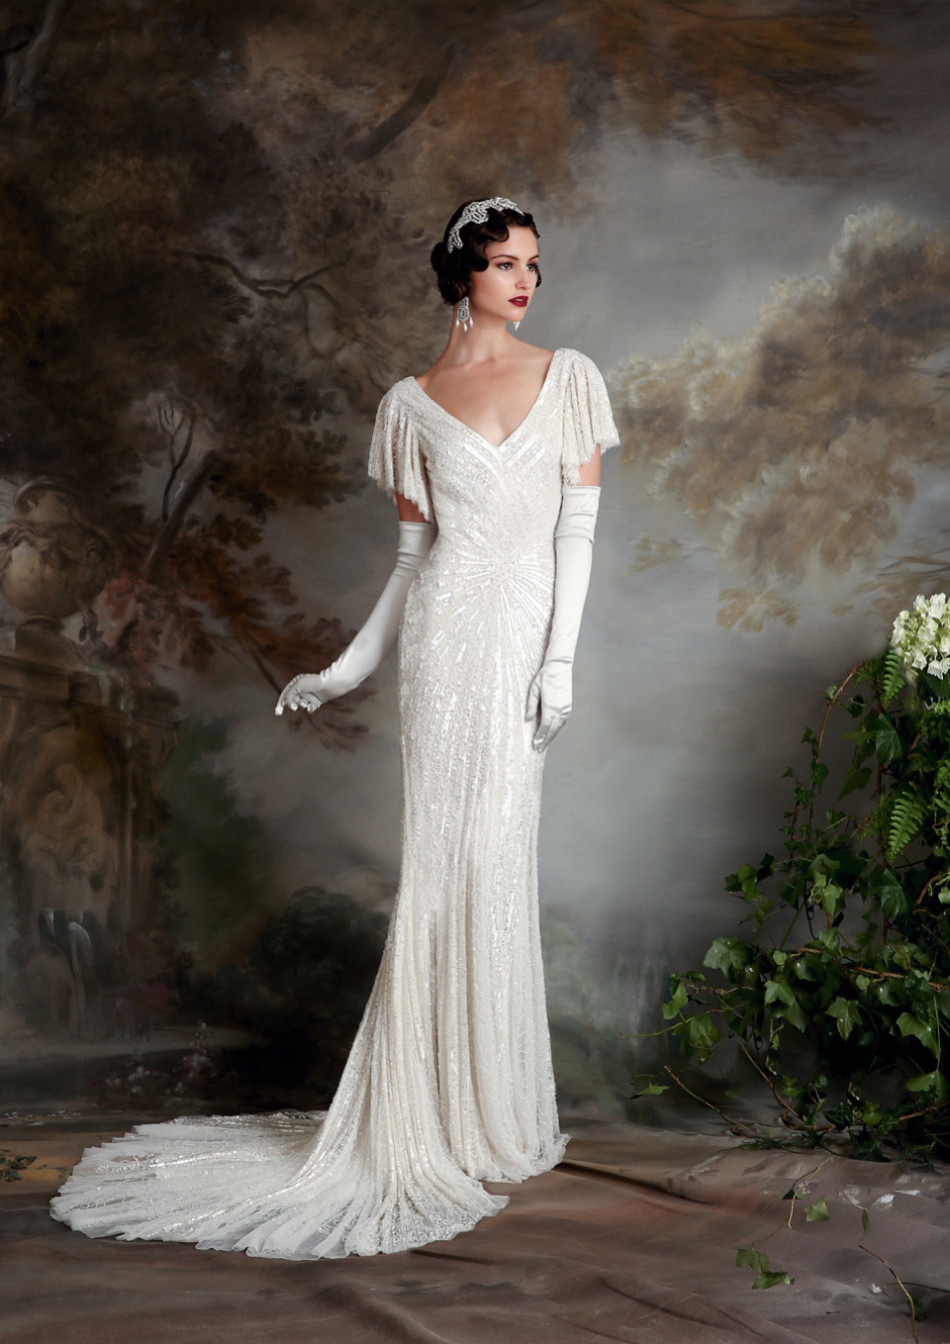 Great Gatsby Wedding Dress
 20 Art Deco Wedding Dress with Gatsby Glamour Chic